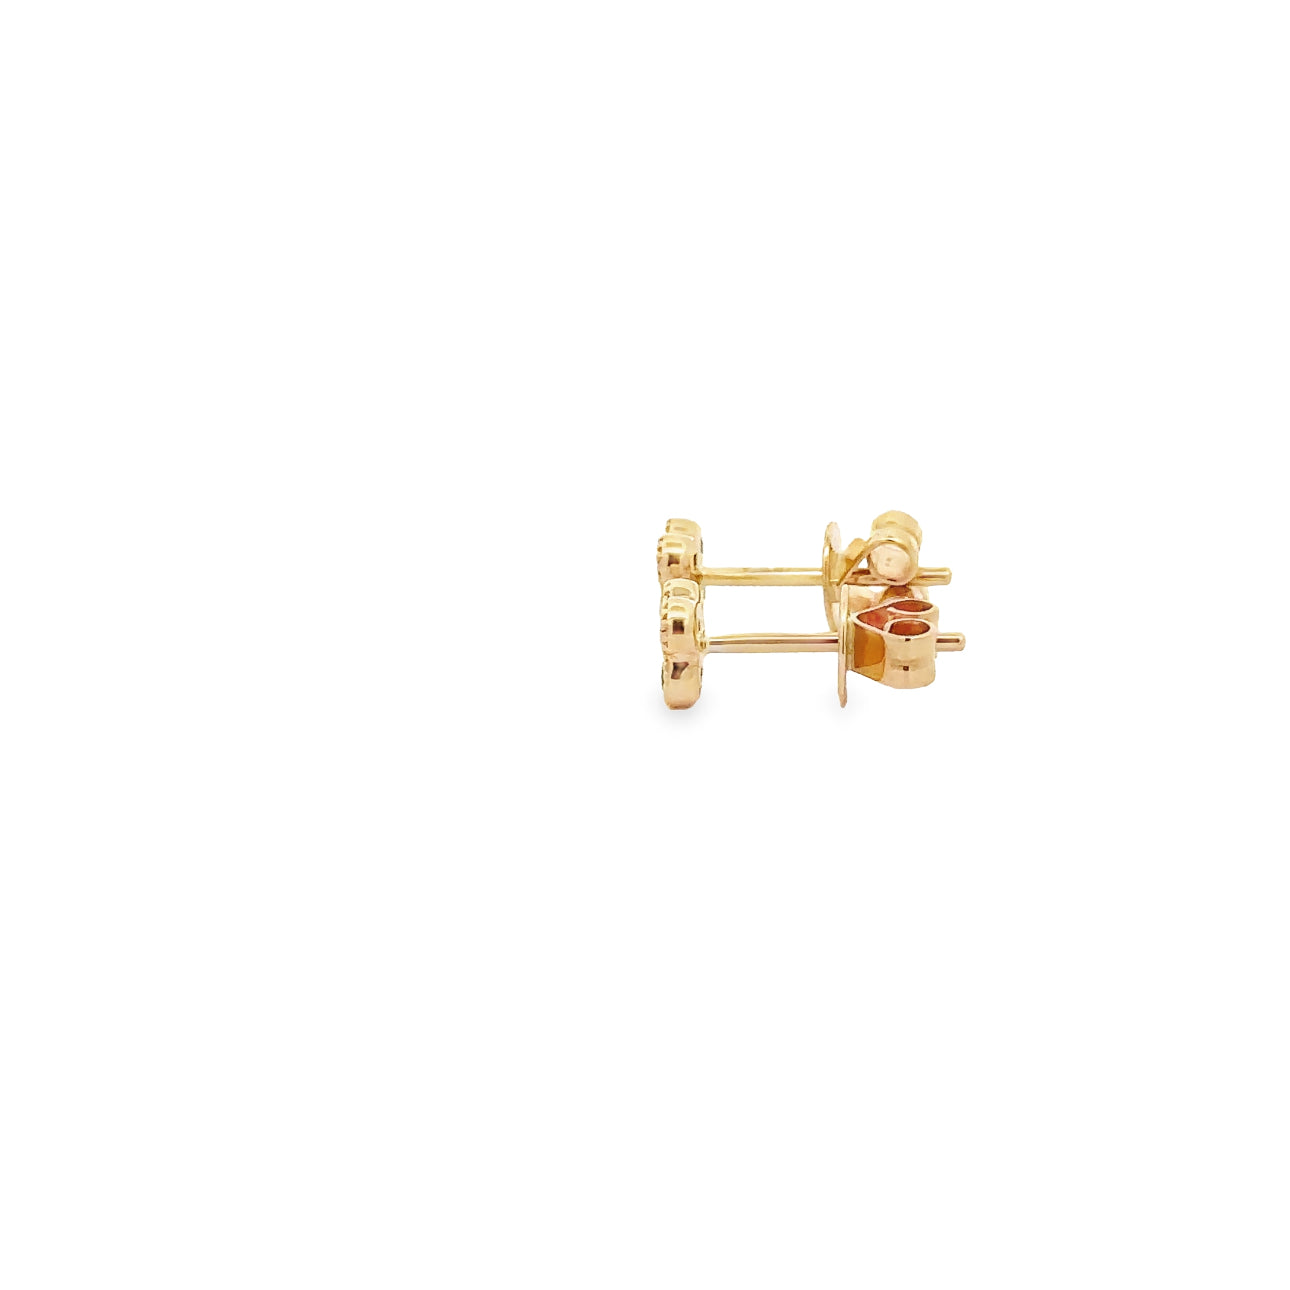 WD1331 14kt Gold Emerald Stude Earrings